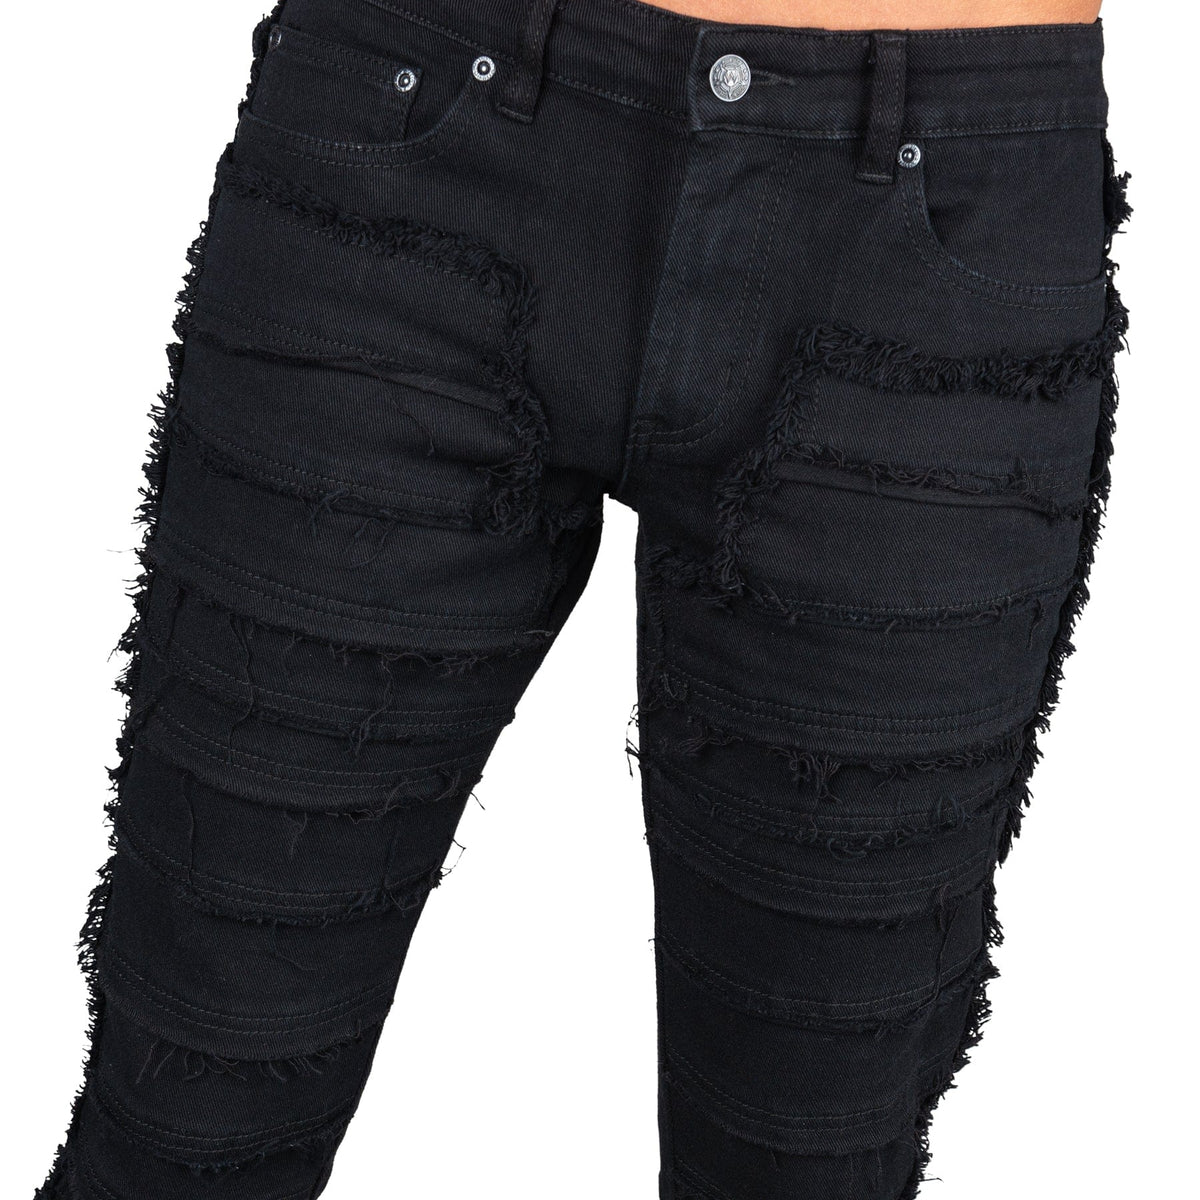 30PCS Gun Black Star Jeans Button 20MM Decoration Garment